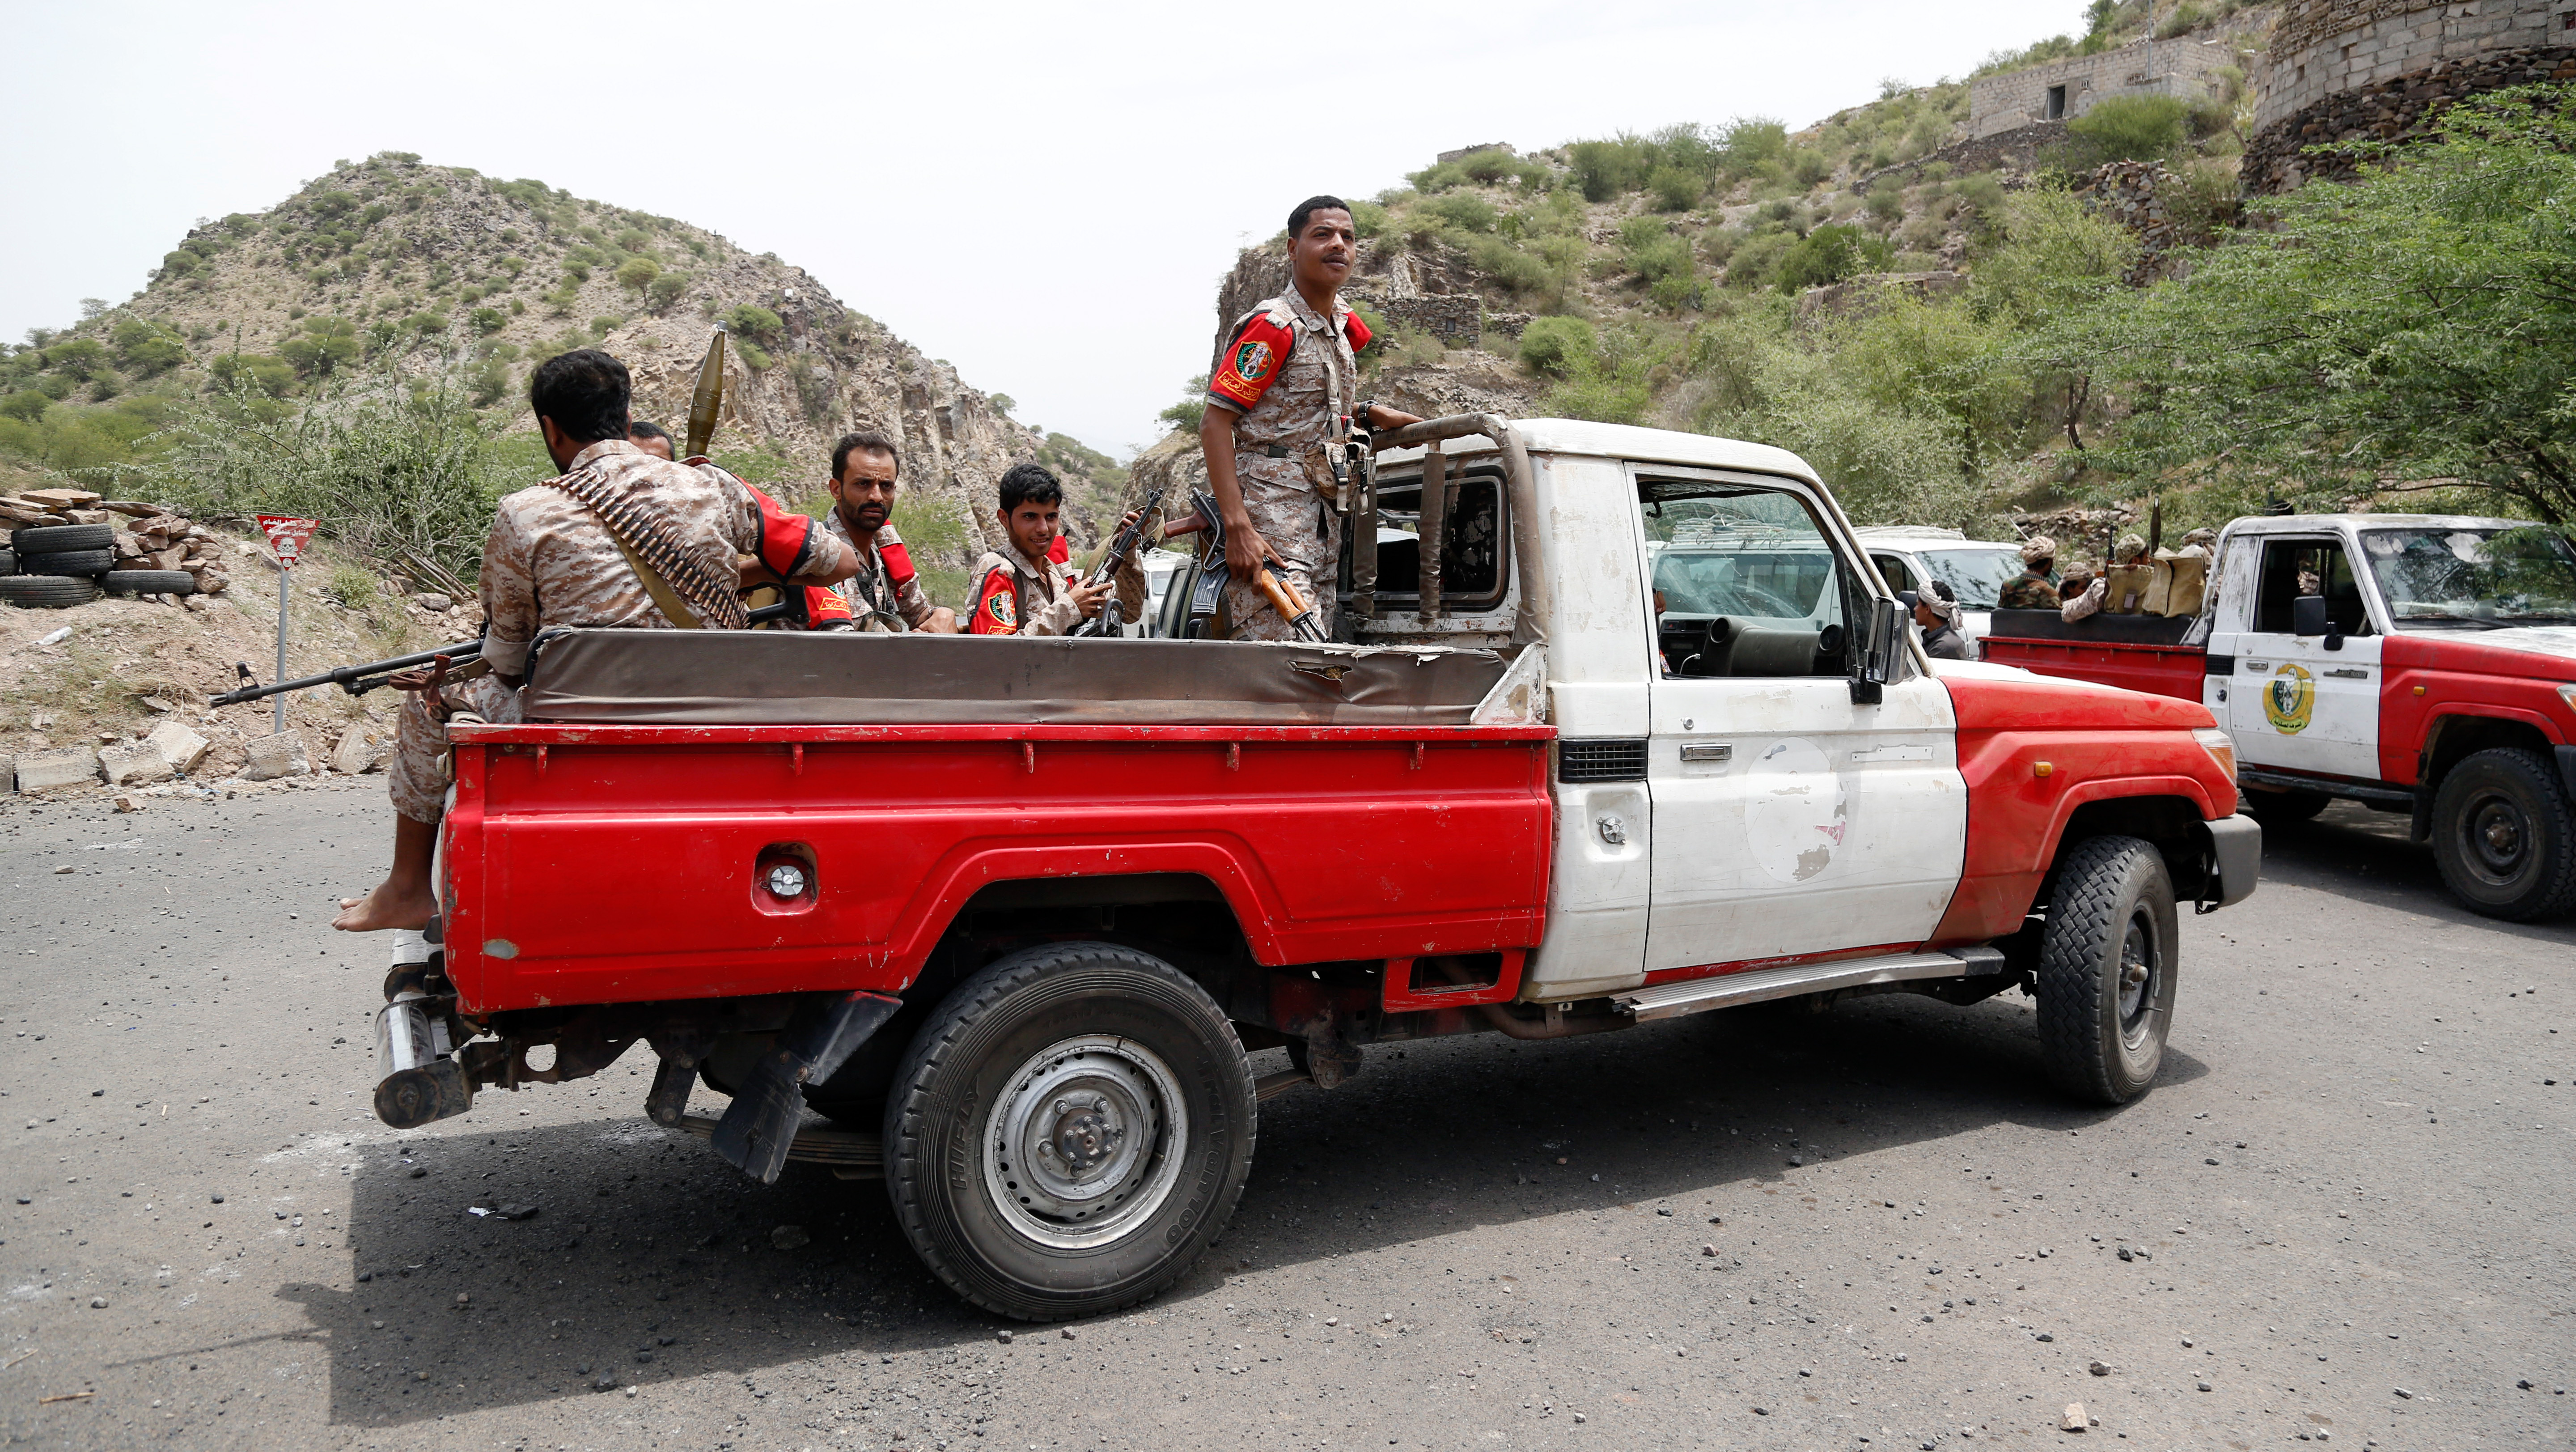 Yemen ceasefire extension: The glass is still half-empty